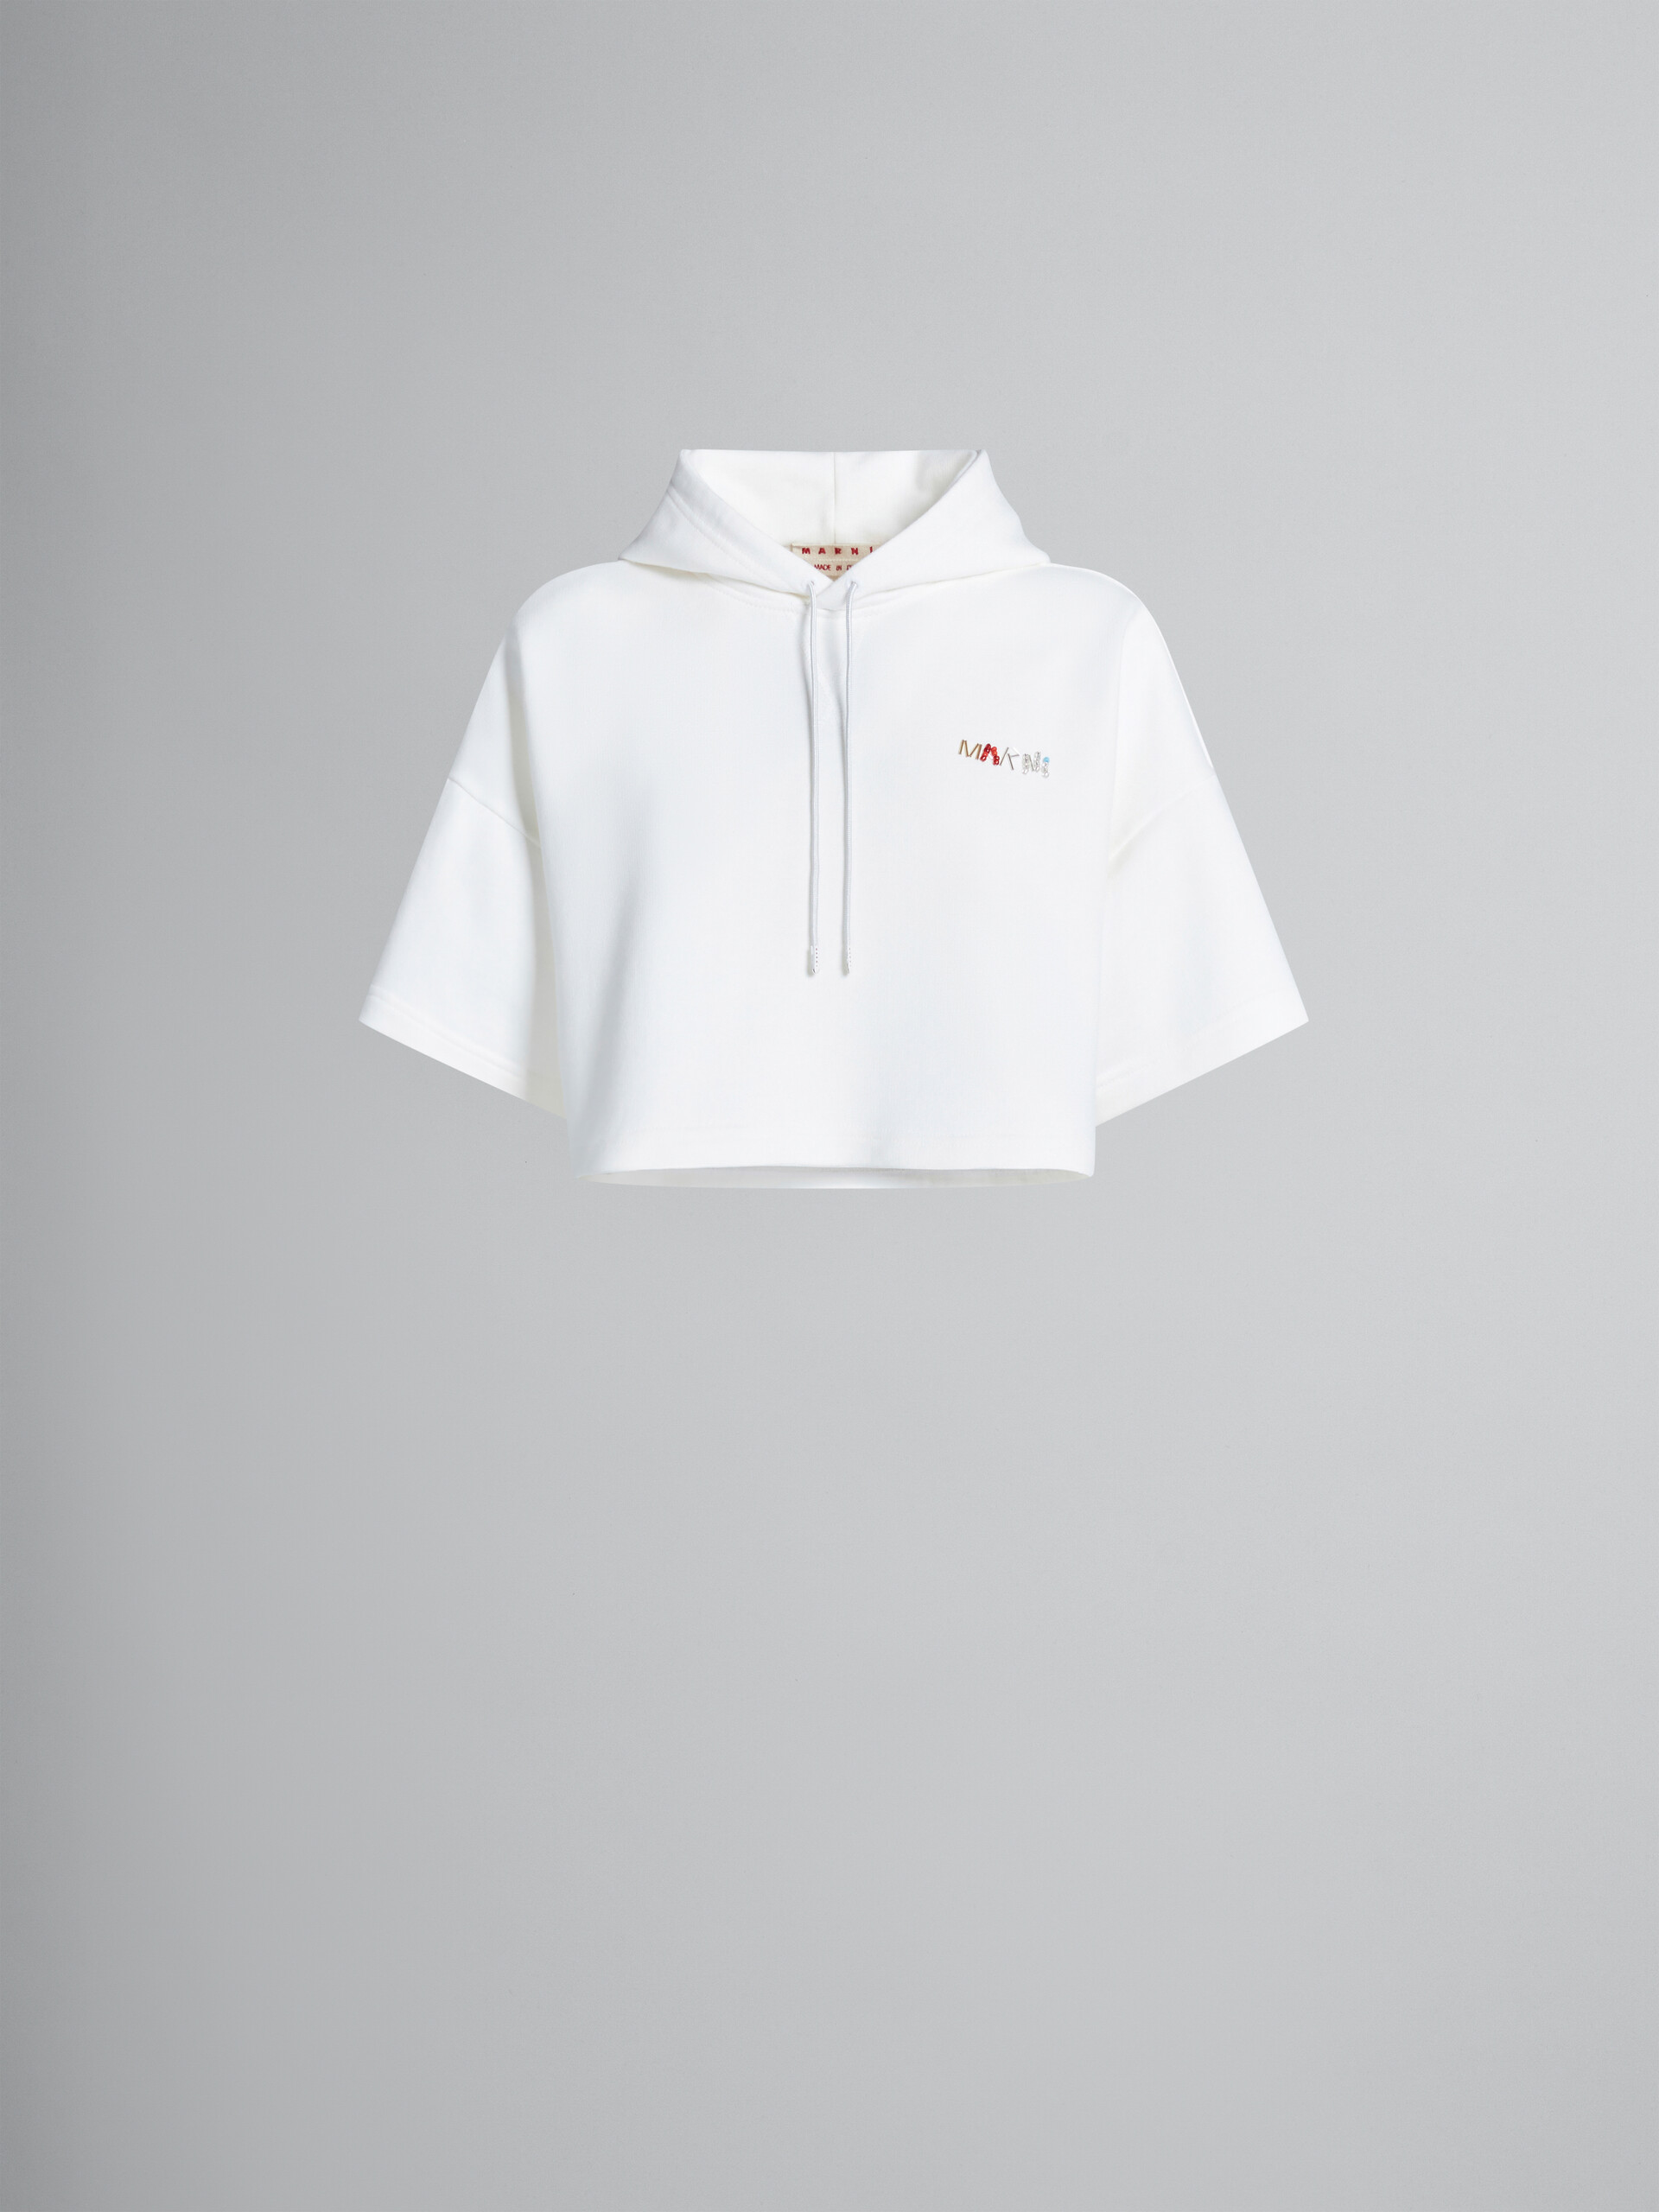 White cropped sweatshirt with beaded Marni logo - Sweaters - Image 1